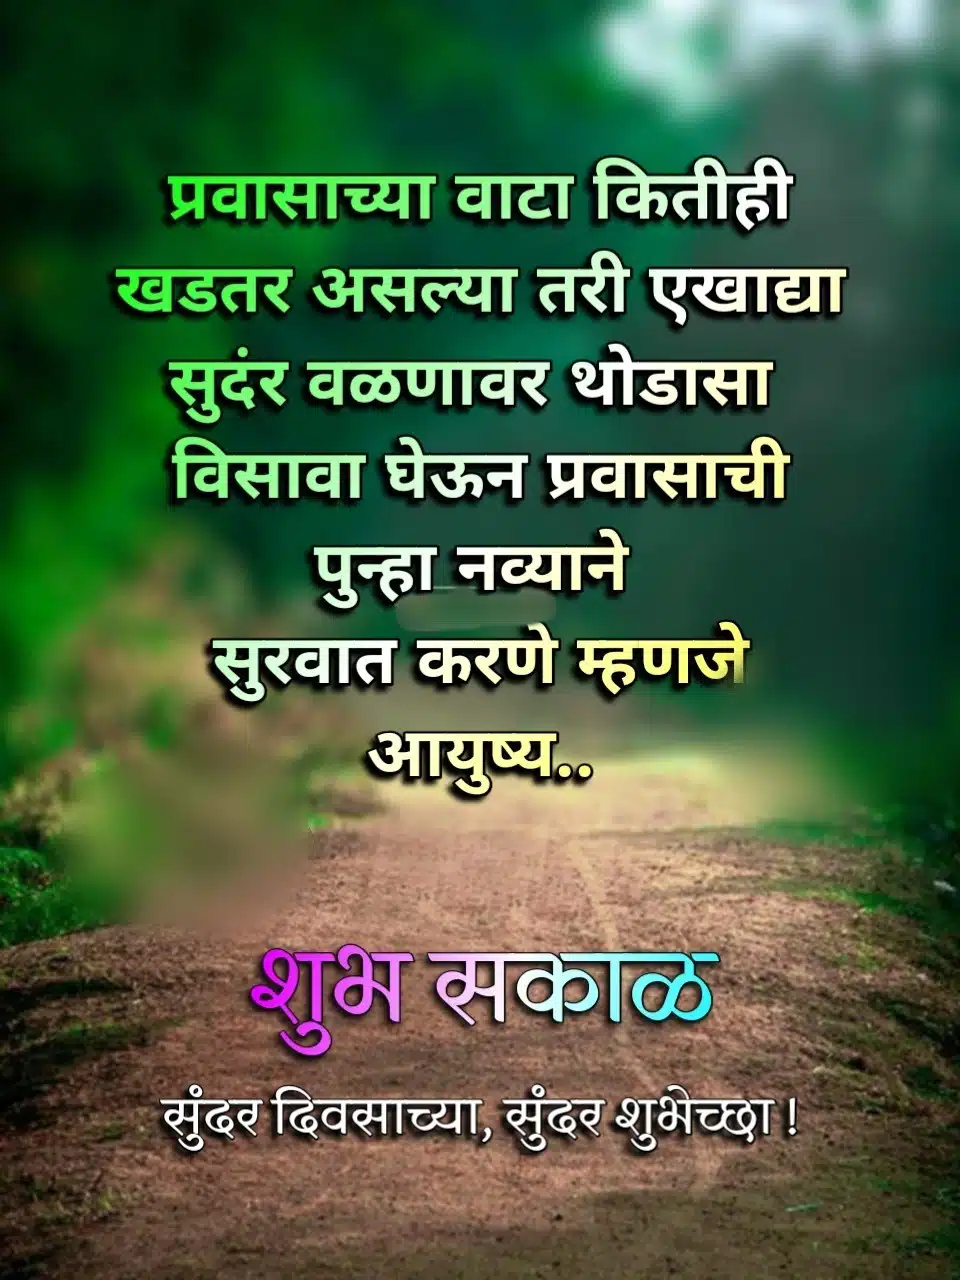 Good Morning Life Quotes In Marathi